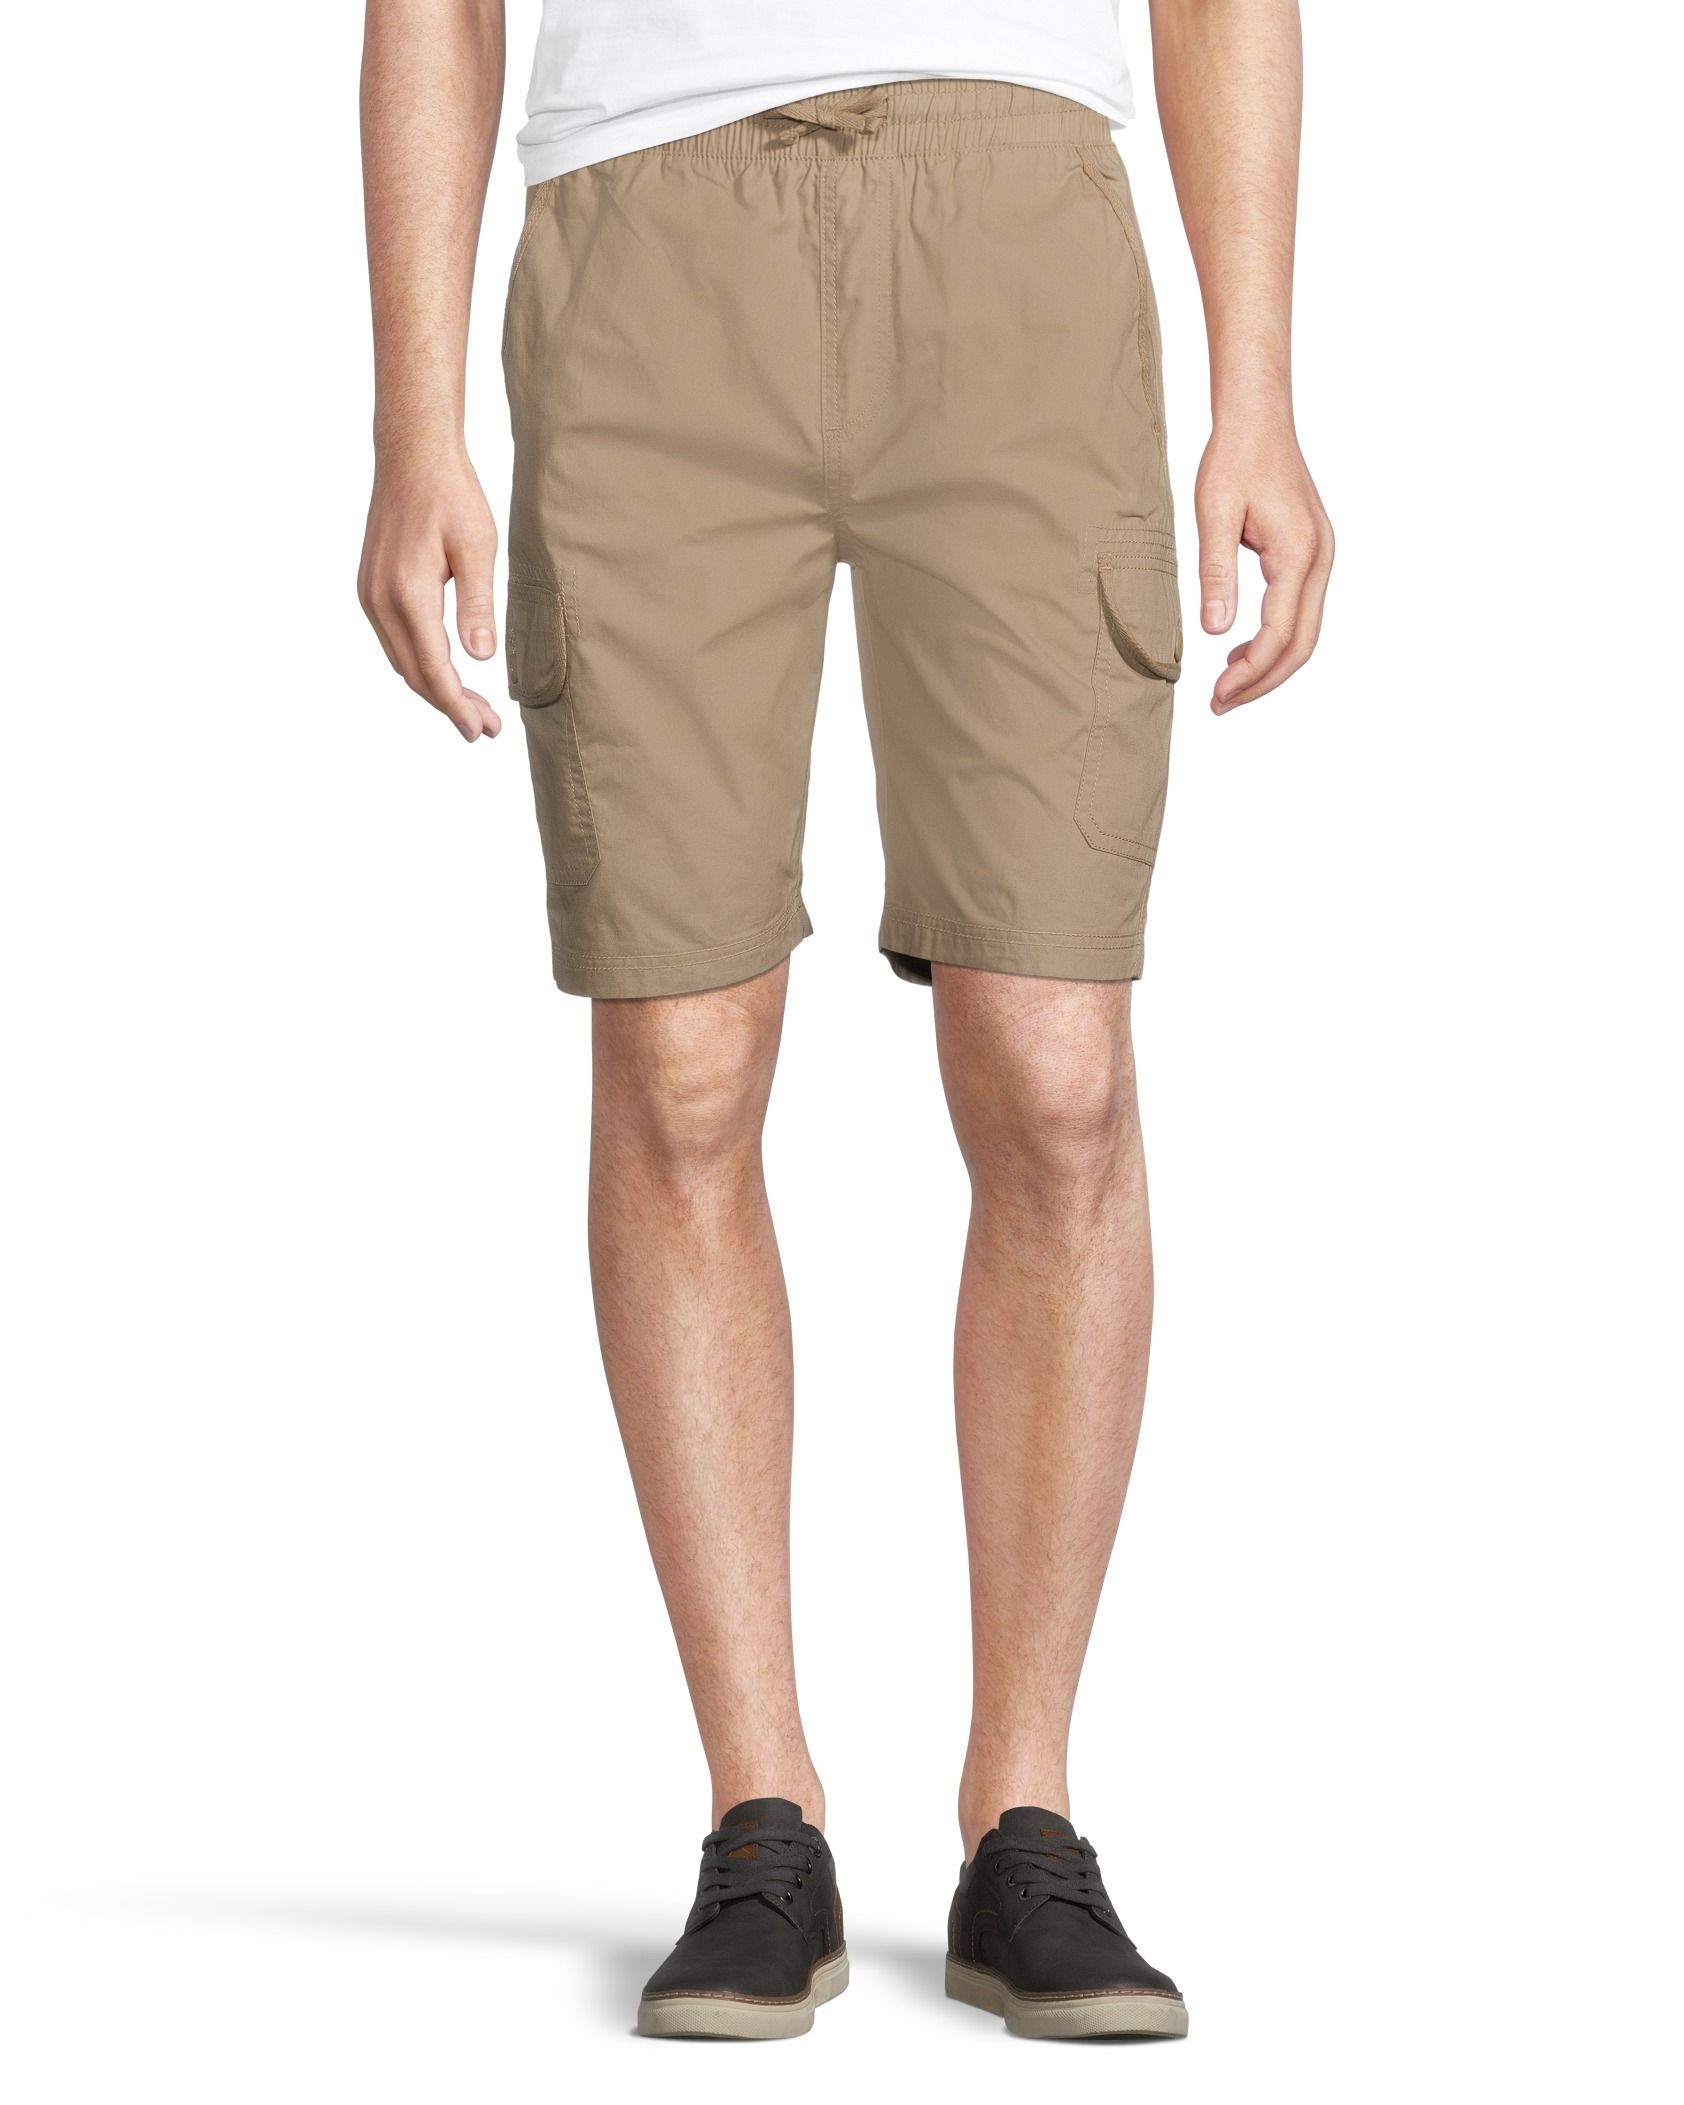 adviicd cotton Shorts Men Cargo Shorts for Men – Twill Mens Cargo